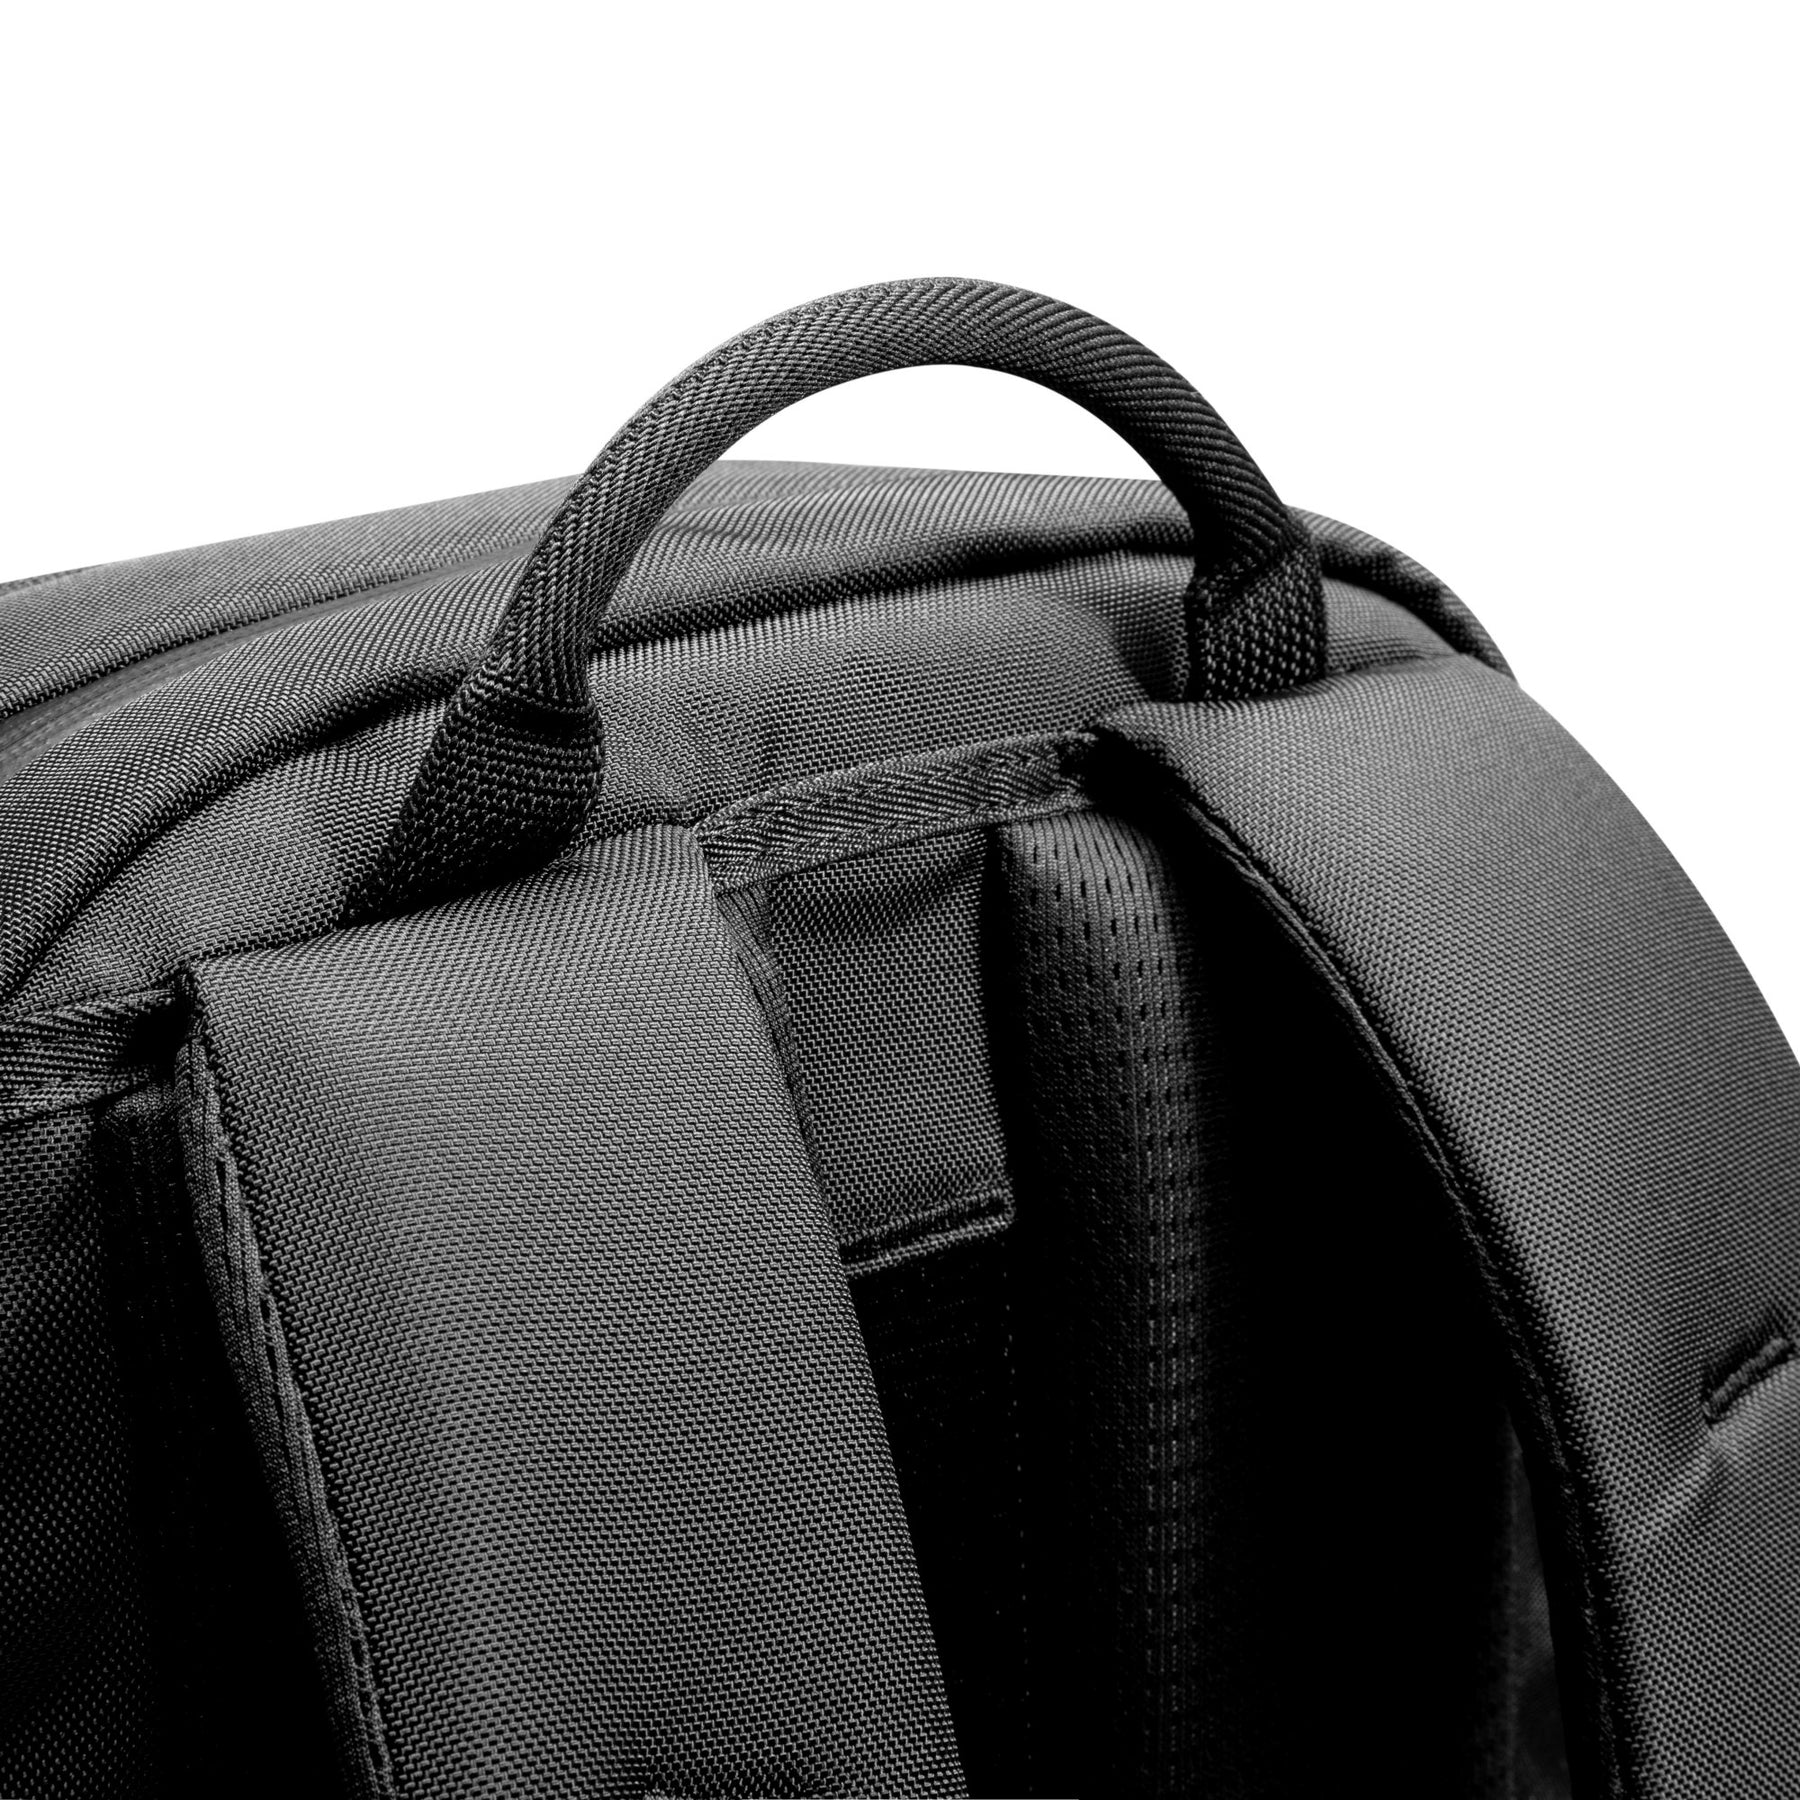 UrbanEX-T65 Laptop Backpack 20L